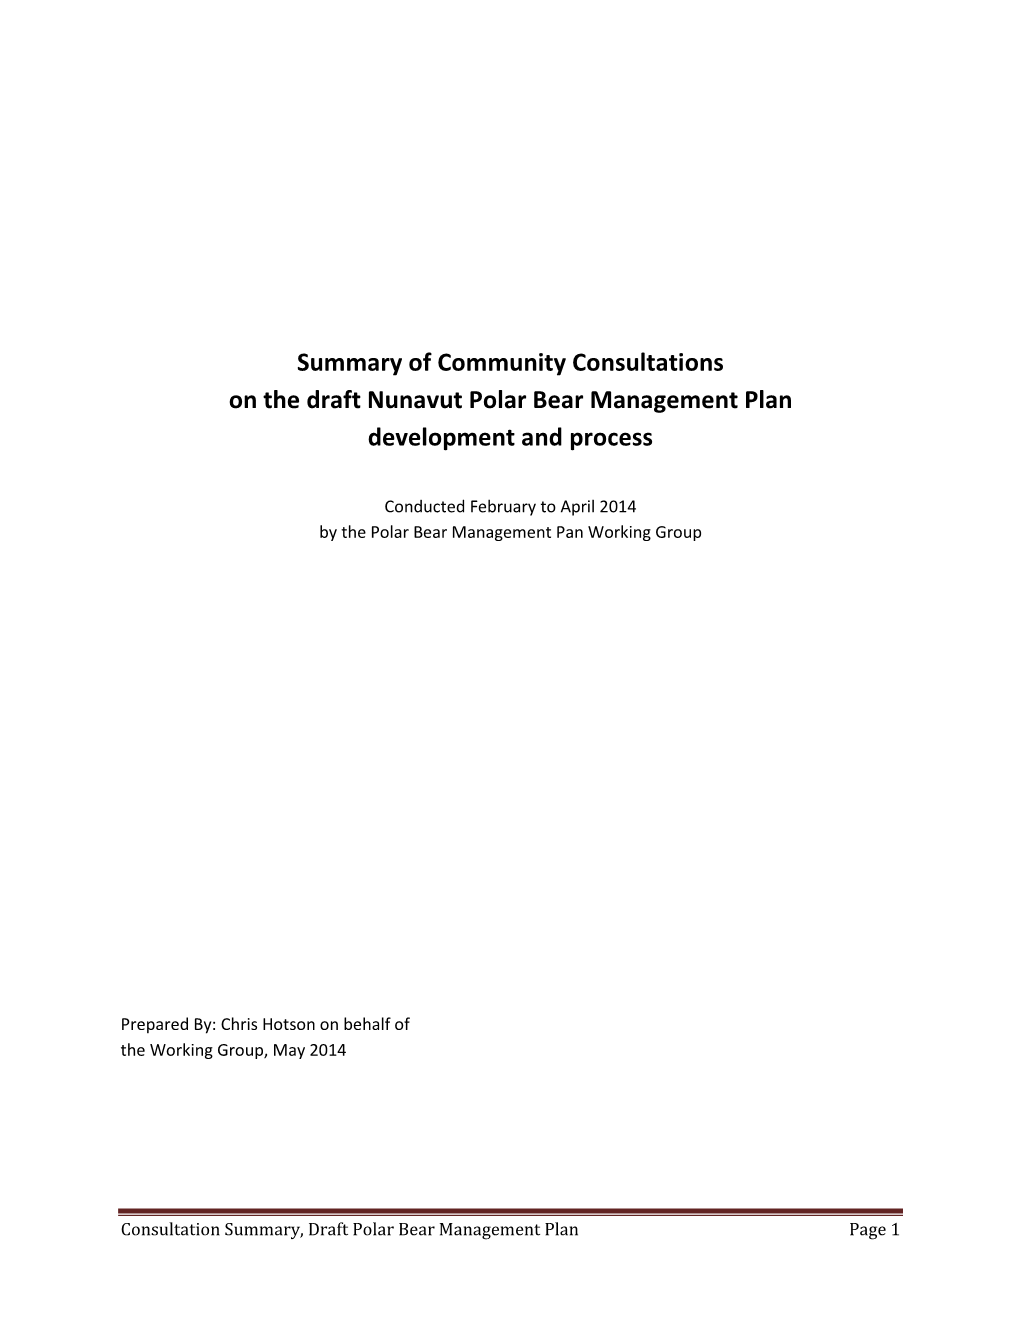 Summary of Community Consultations on the Draft Nunavut Polar Bear Management Plan Development and Process